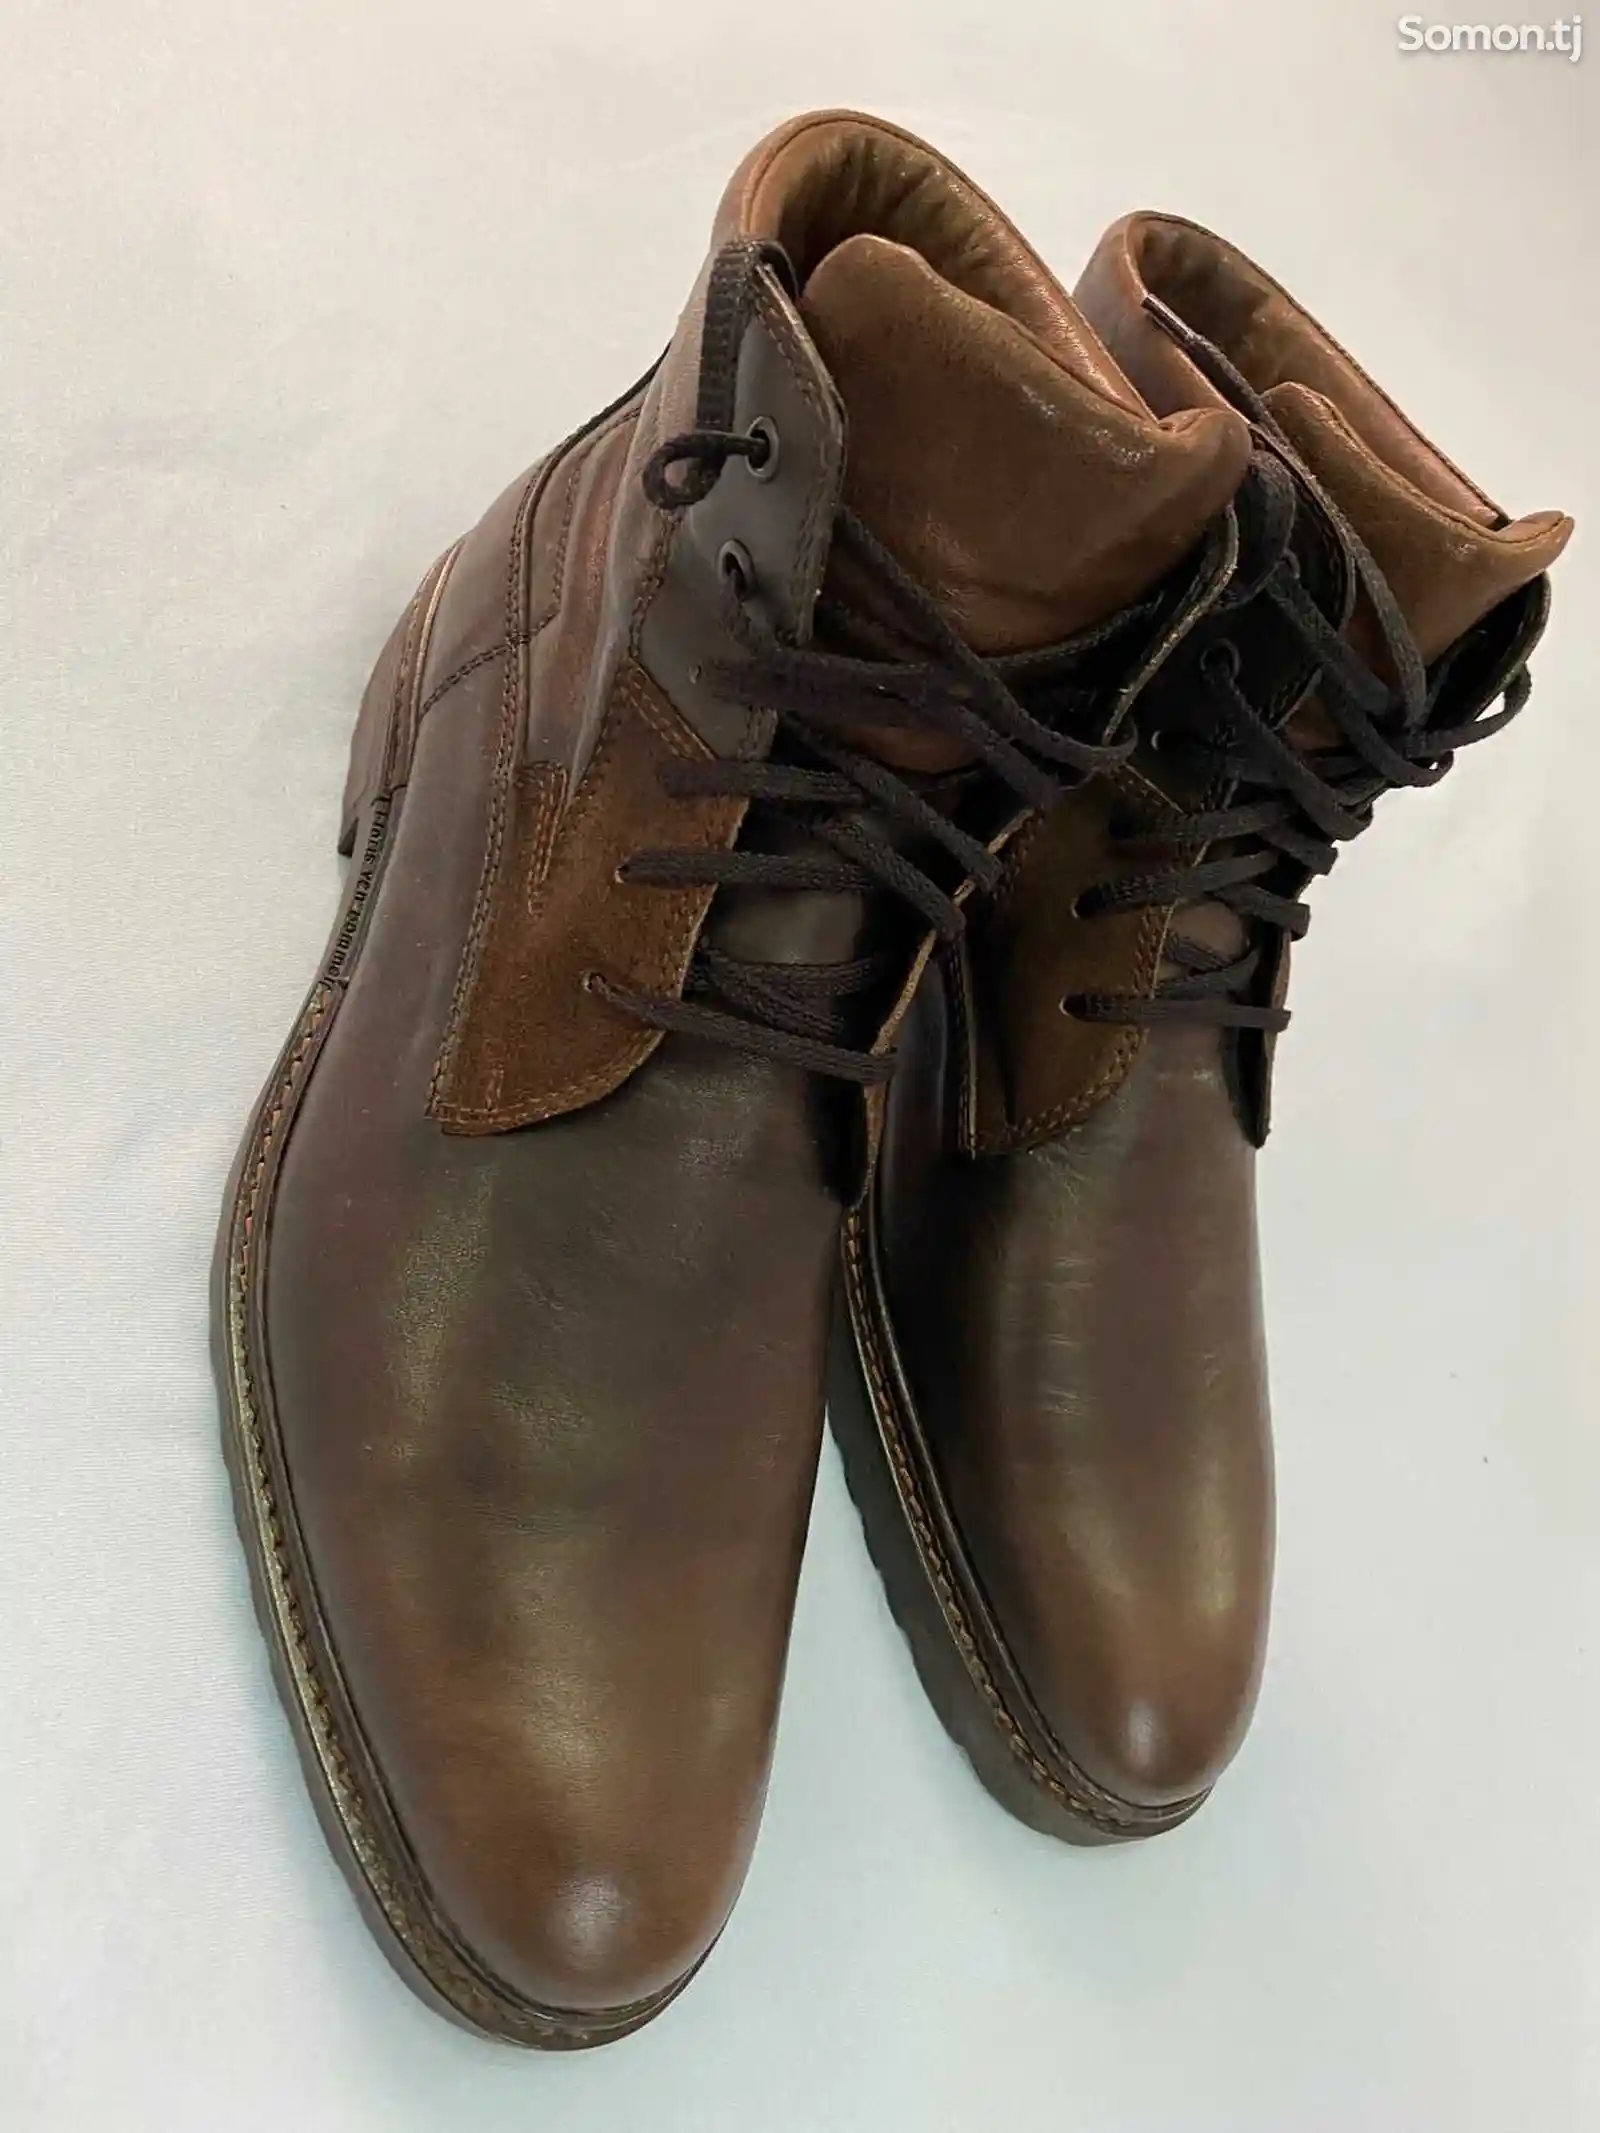 Сапоги муза туфли мардона мужской обувьVan Bommel-2